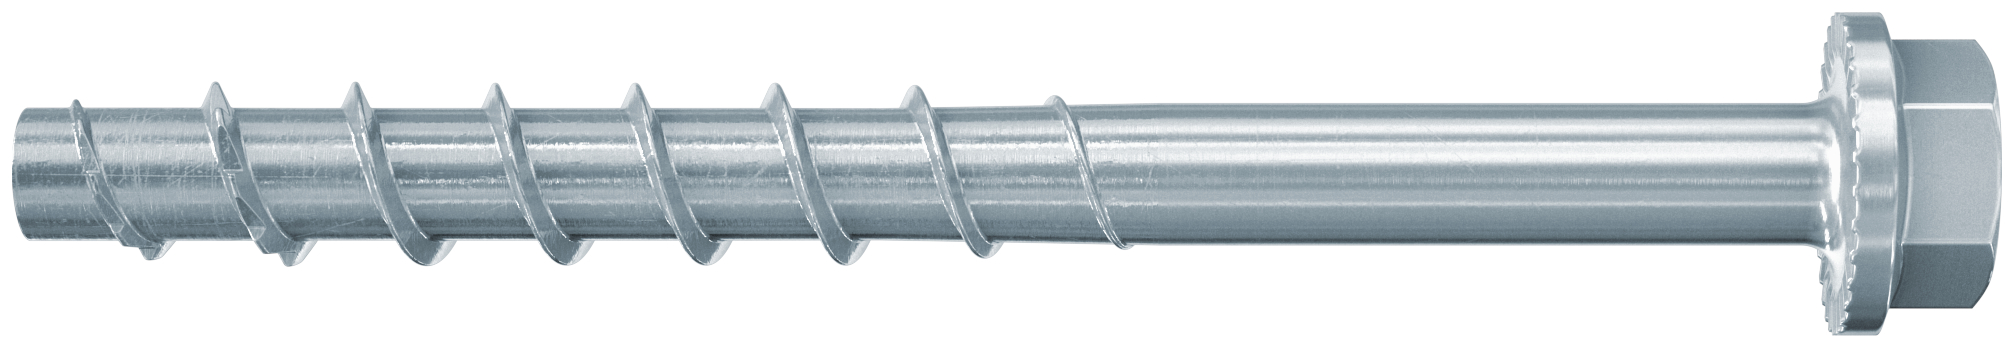 Concrete anchoring screw hex/hexalobular type US/TX Carbon steel, hardened Zinc plated